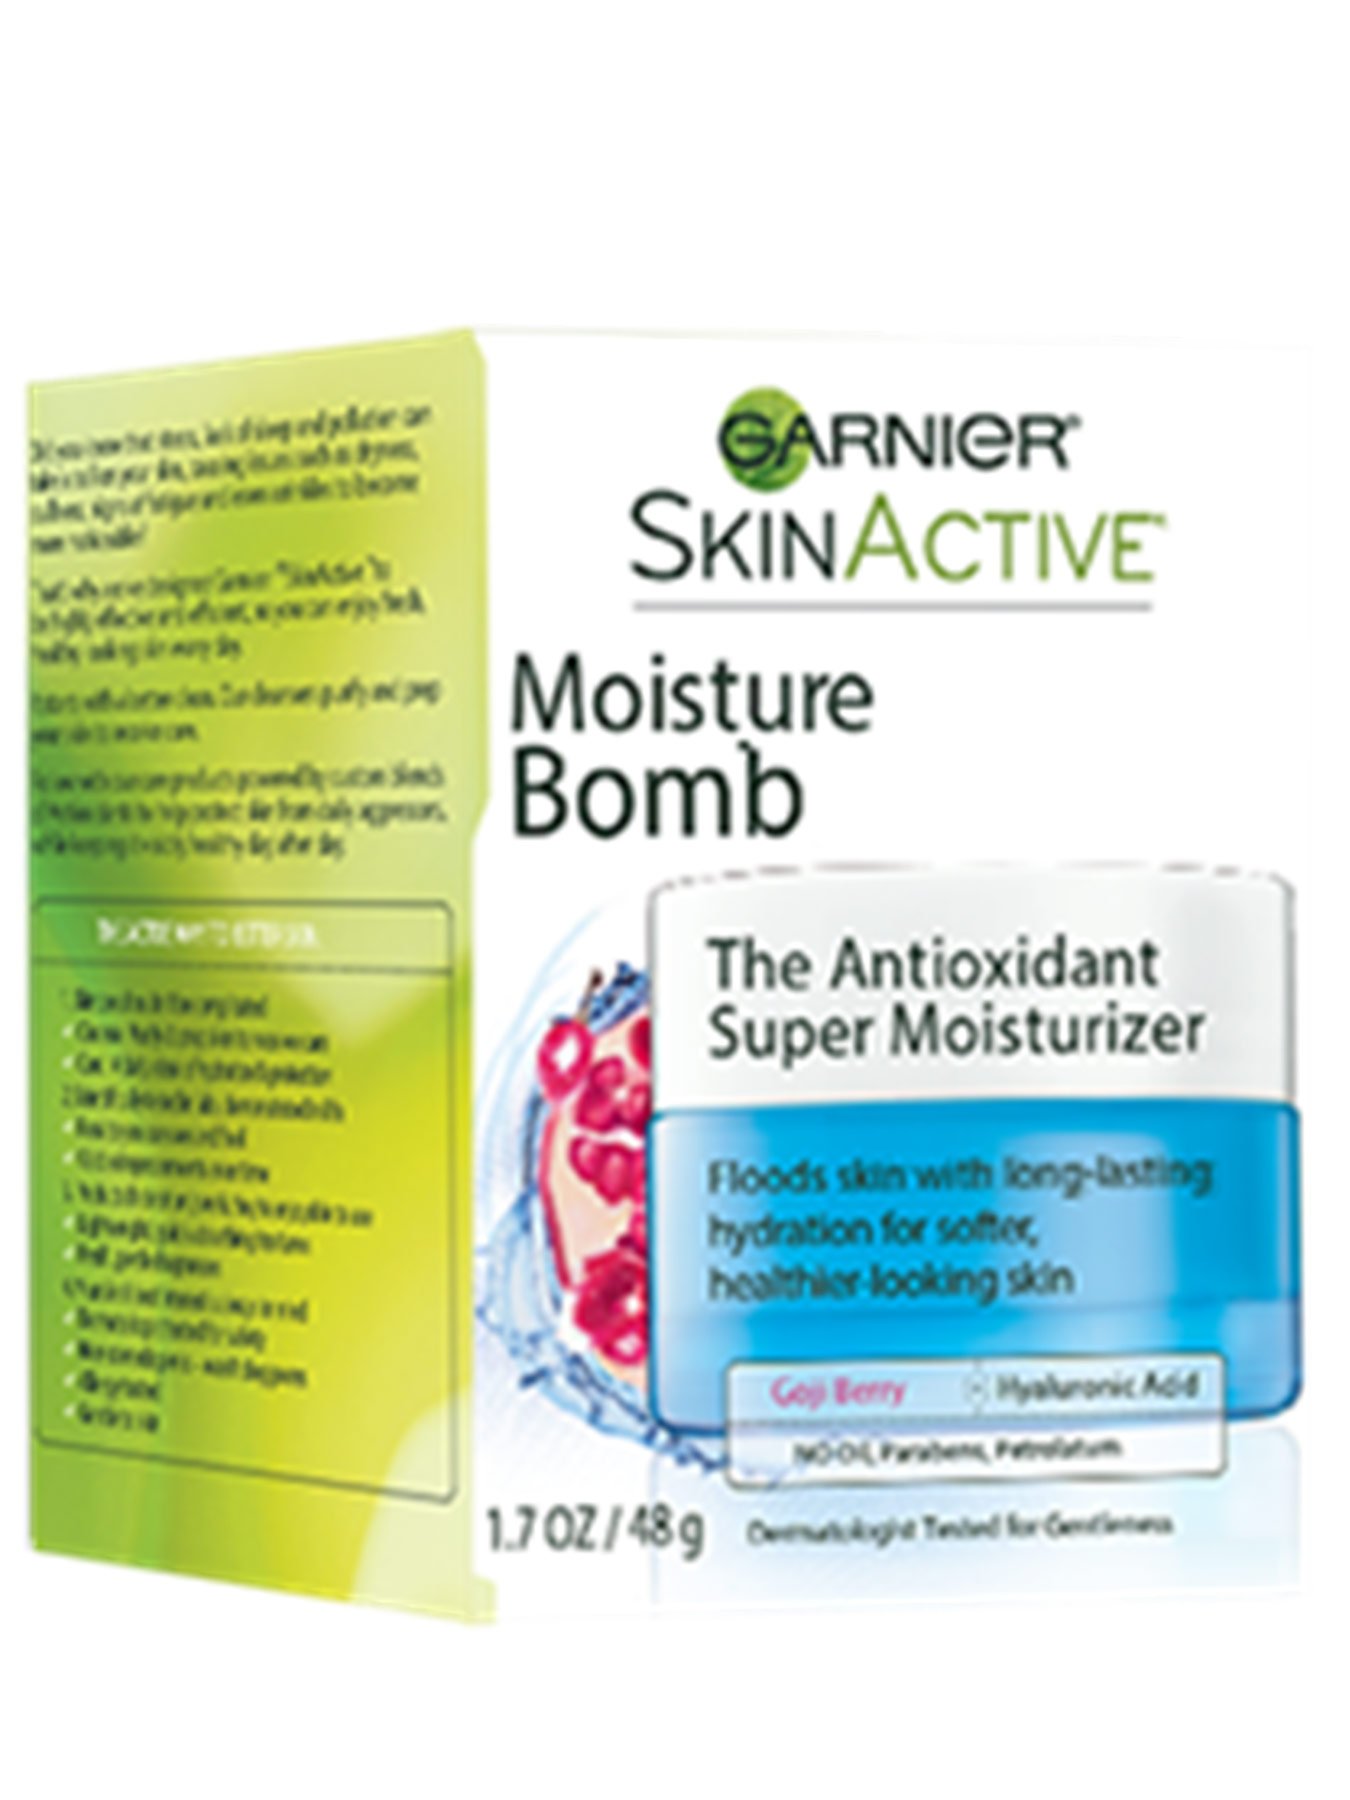 garnier skinactive moisture bomb super moisturizer skin care productshot 2